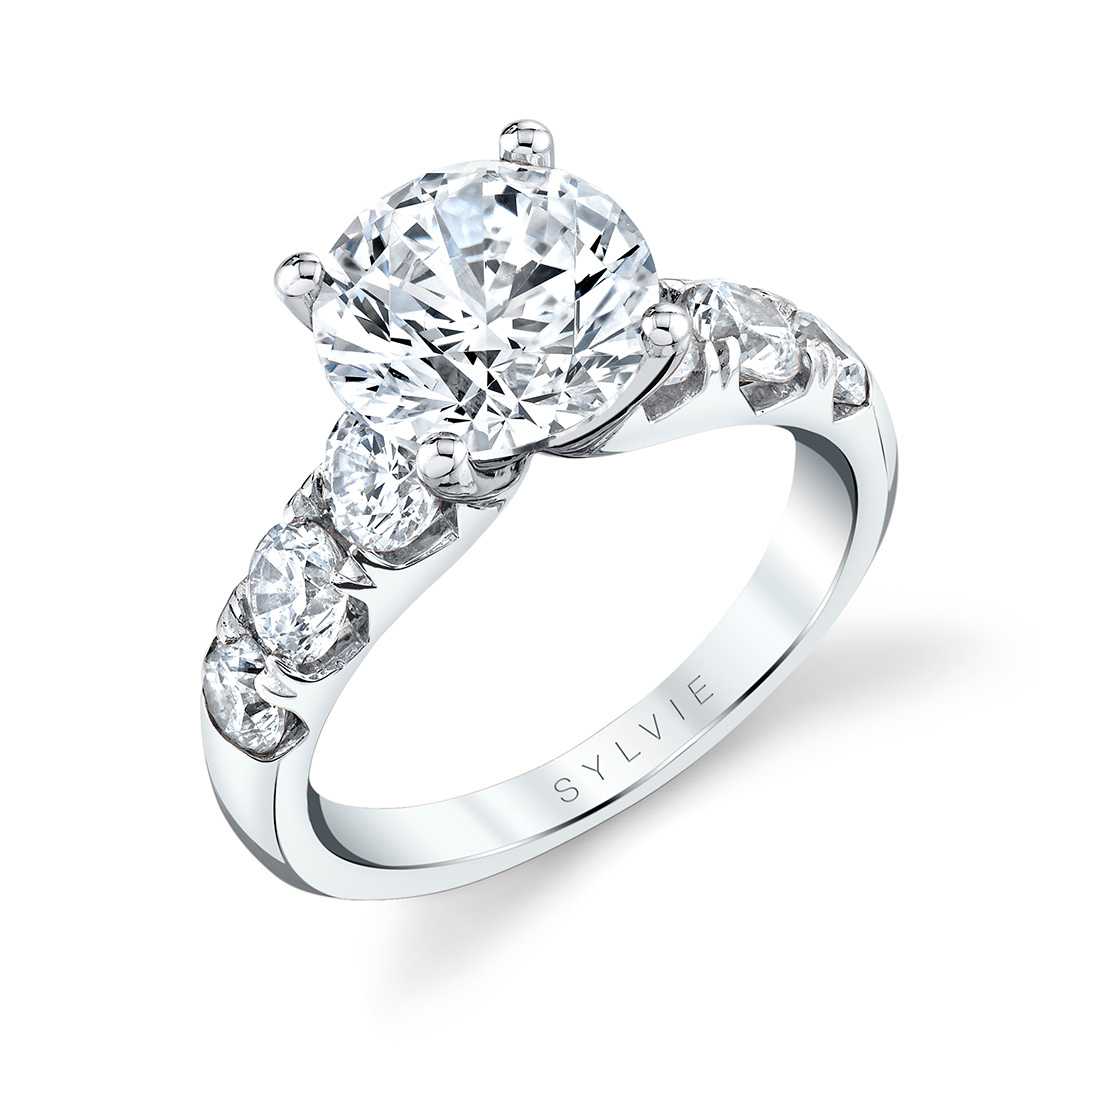 3 carat diamond engagement ring